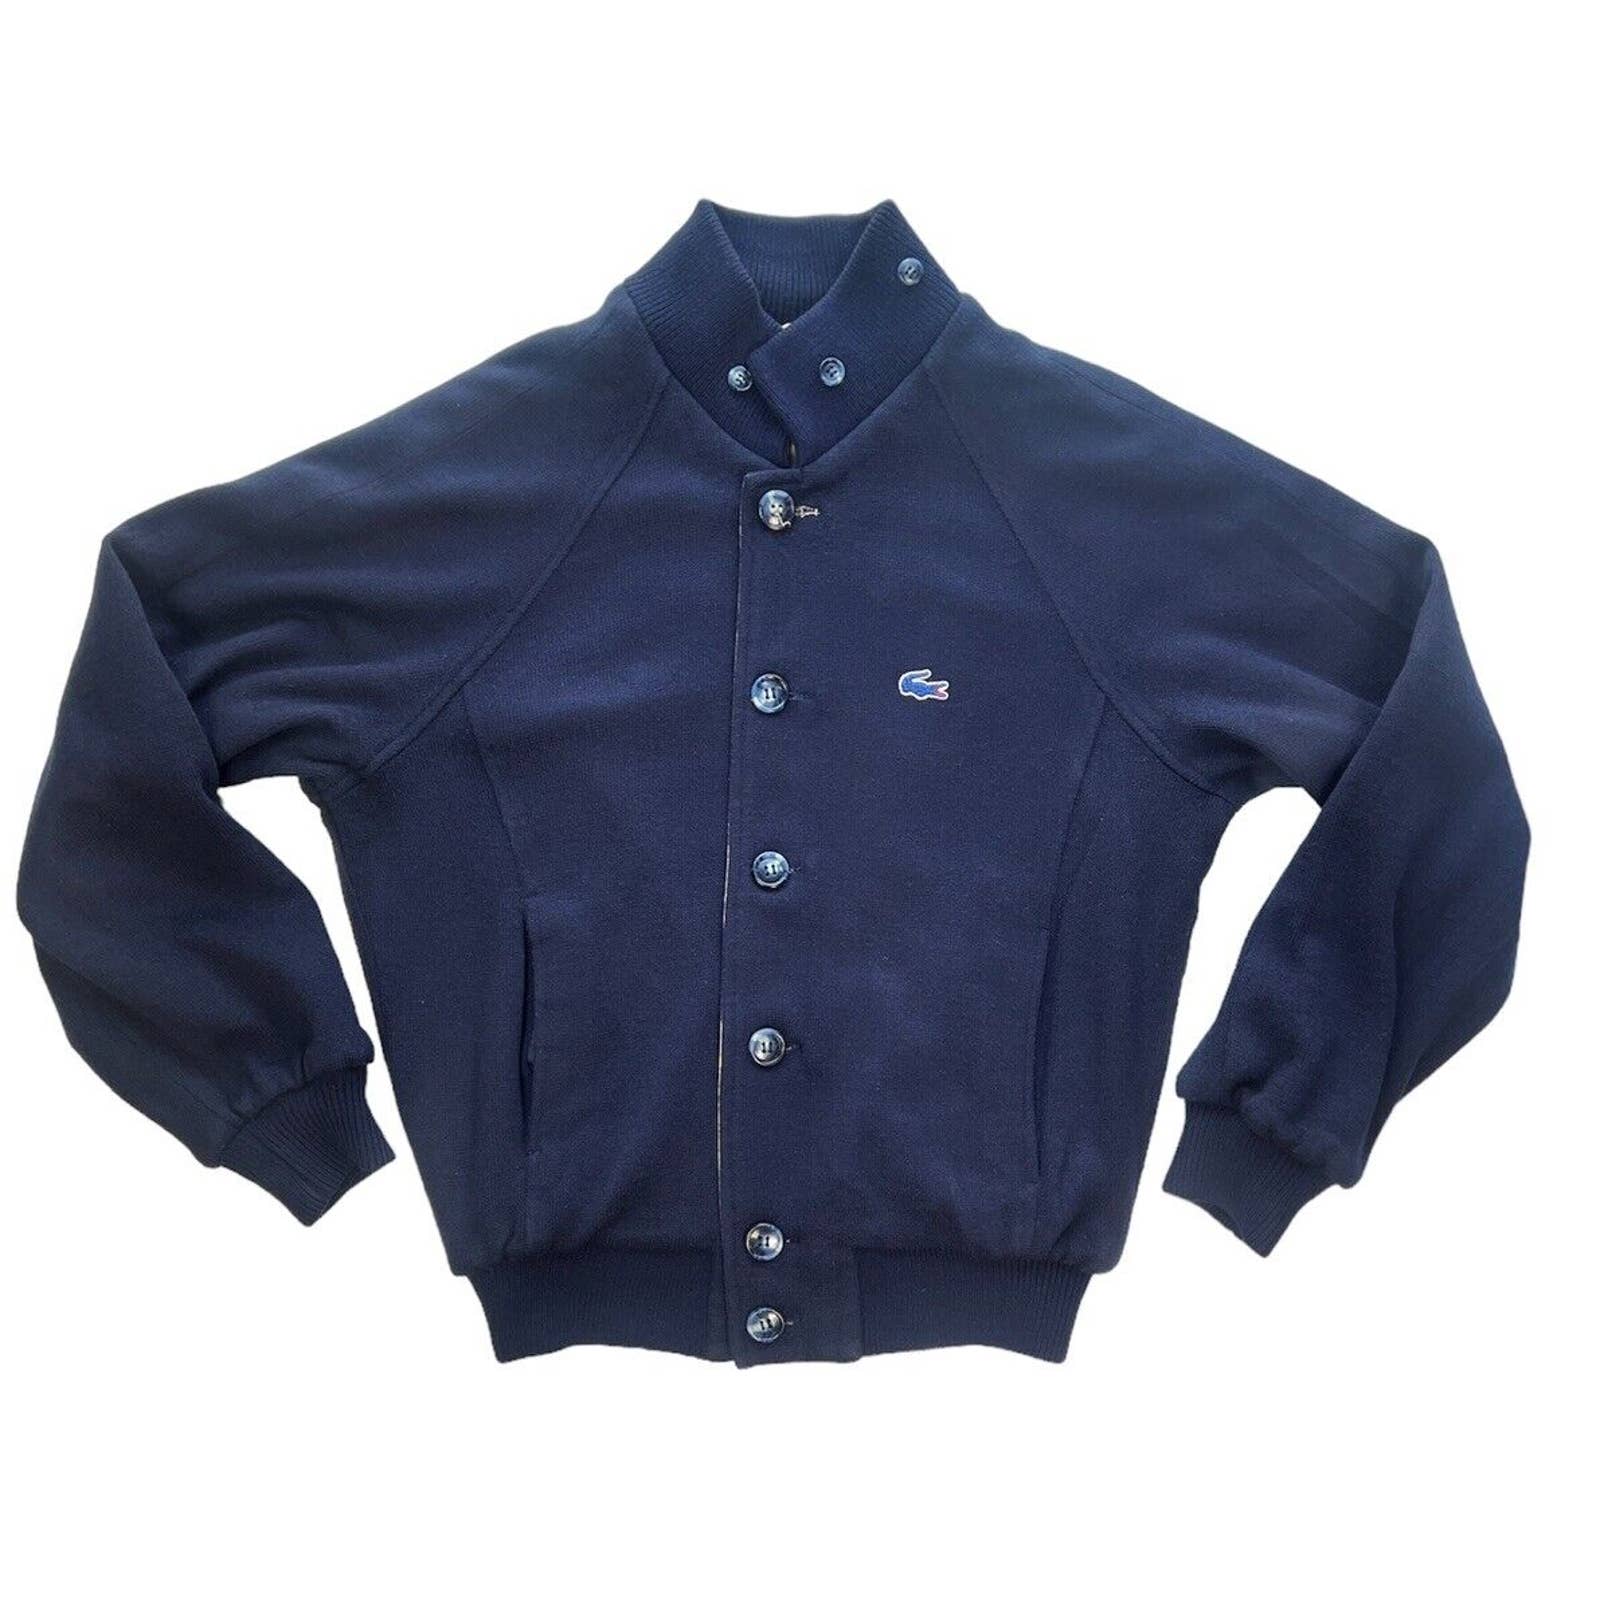 Vintage 80's Lacoste Reversible Sweater Jacket Men’s Small Bomber Tan & Blue